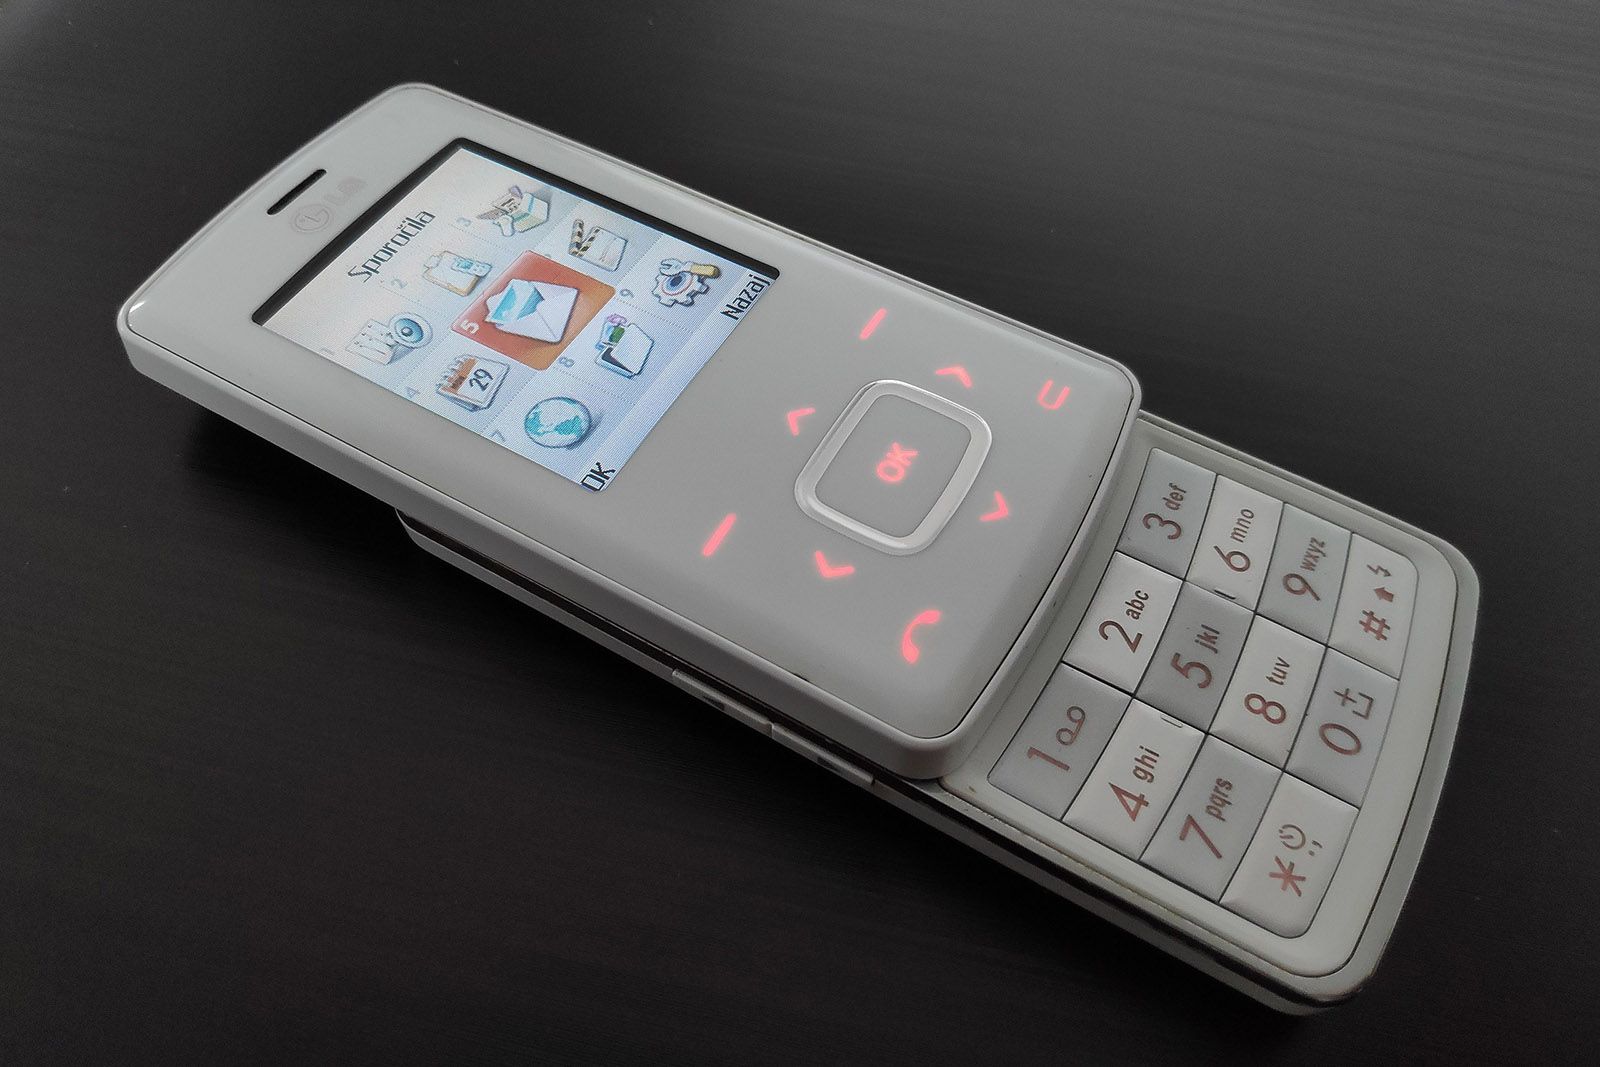 LG to drop G series brand next flagship evokes classic Chocolate phone image 1